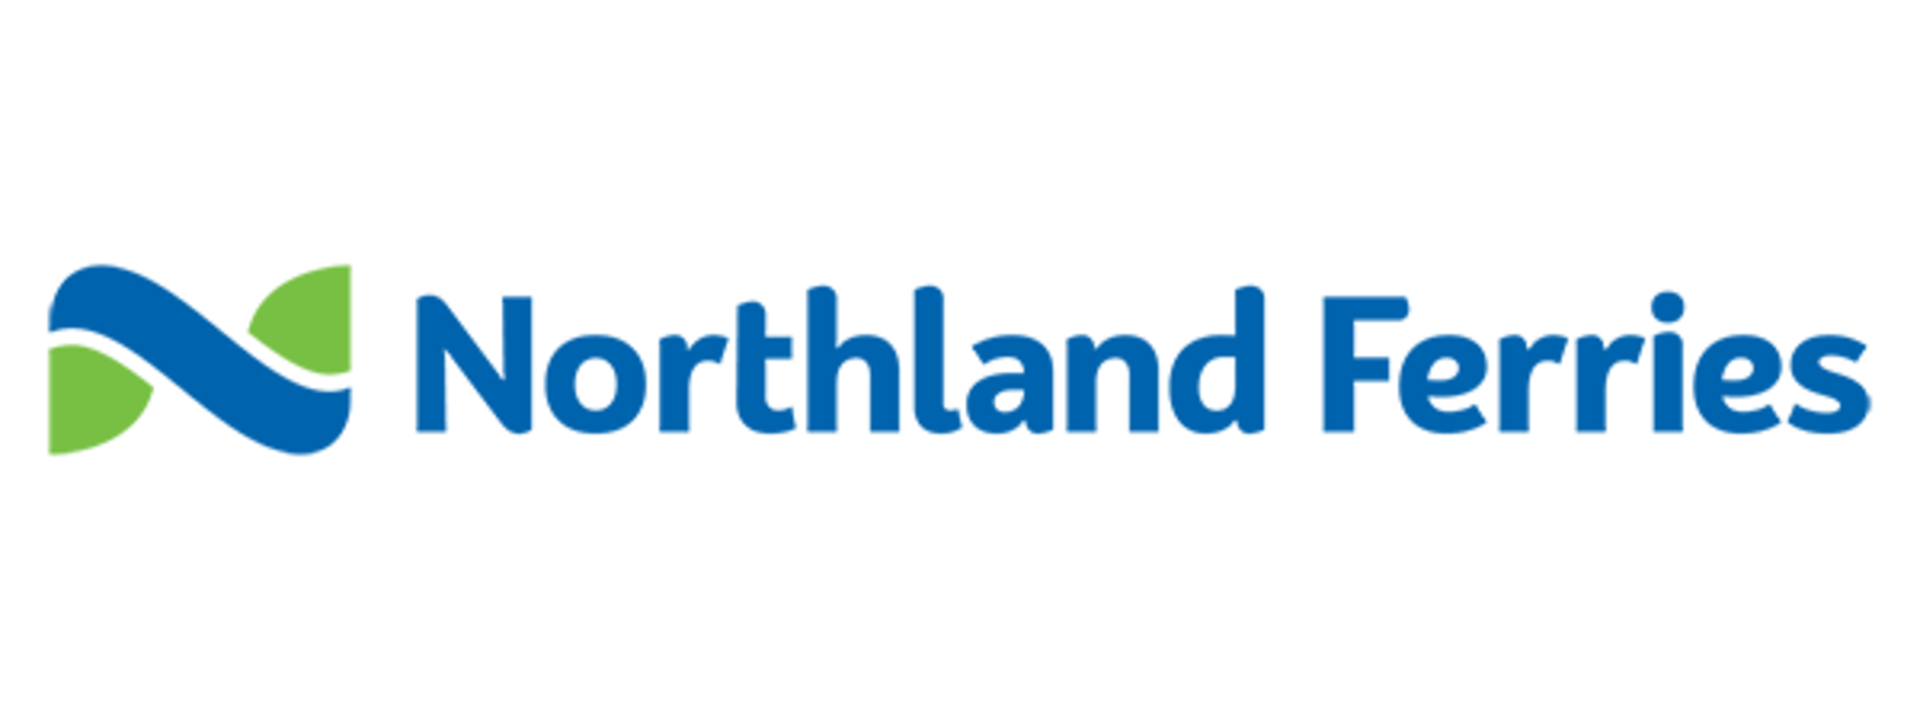 northland-ferries-rgb-600-whitebg.png